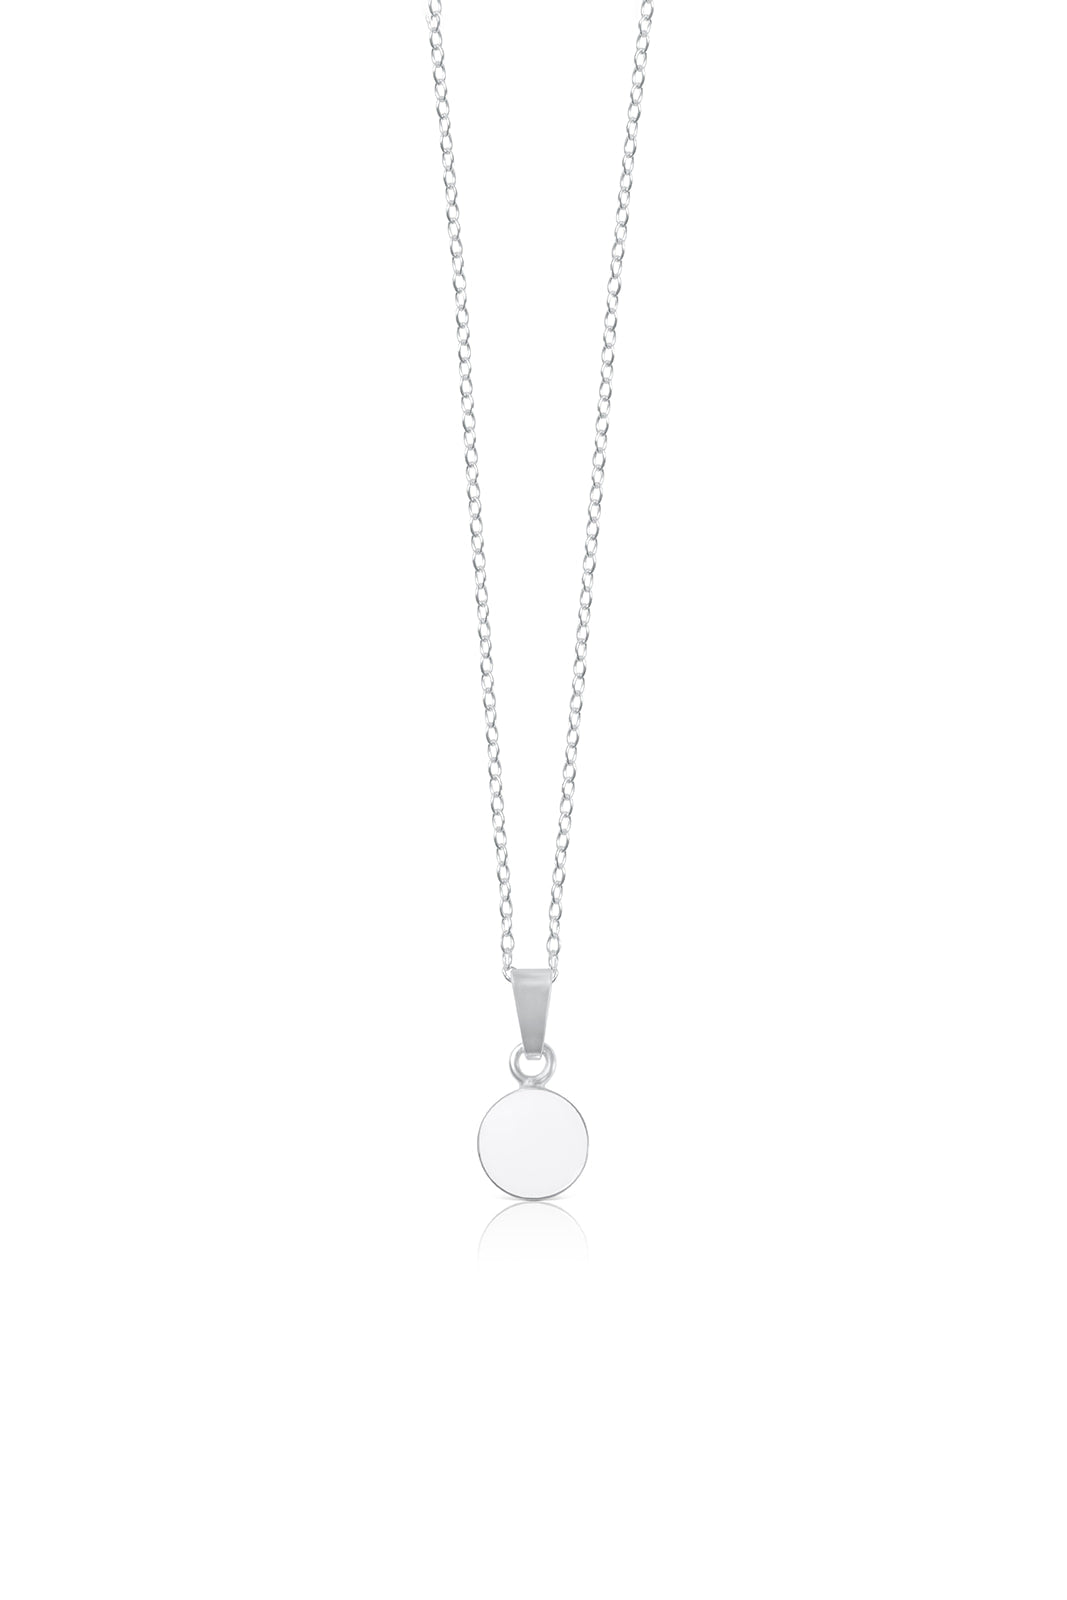 Simplicity Pendant Necklace - Silver